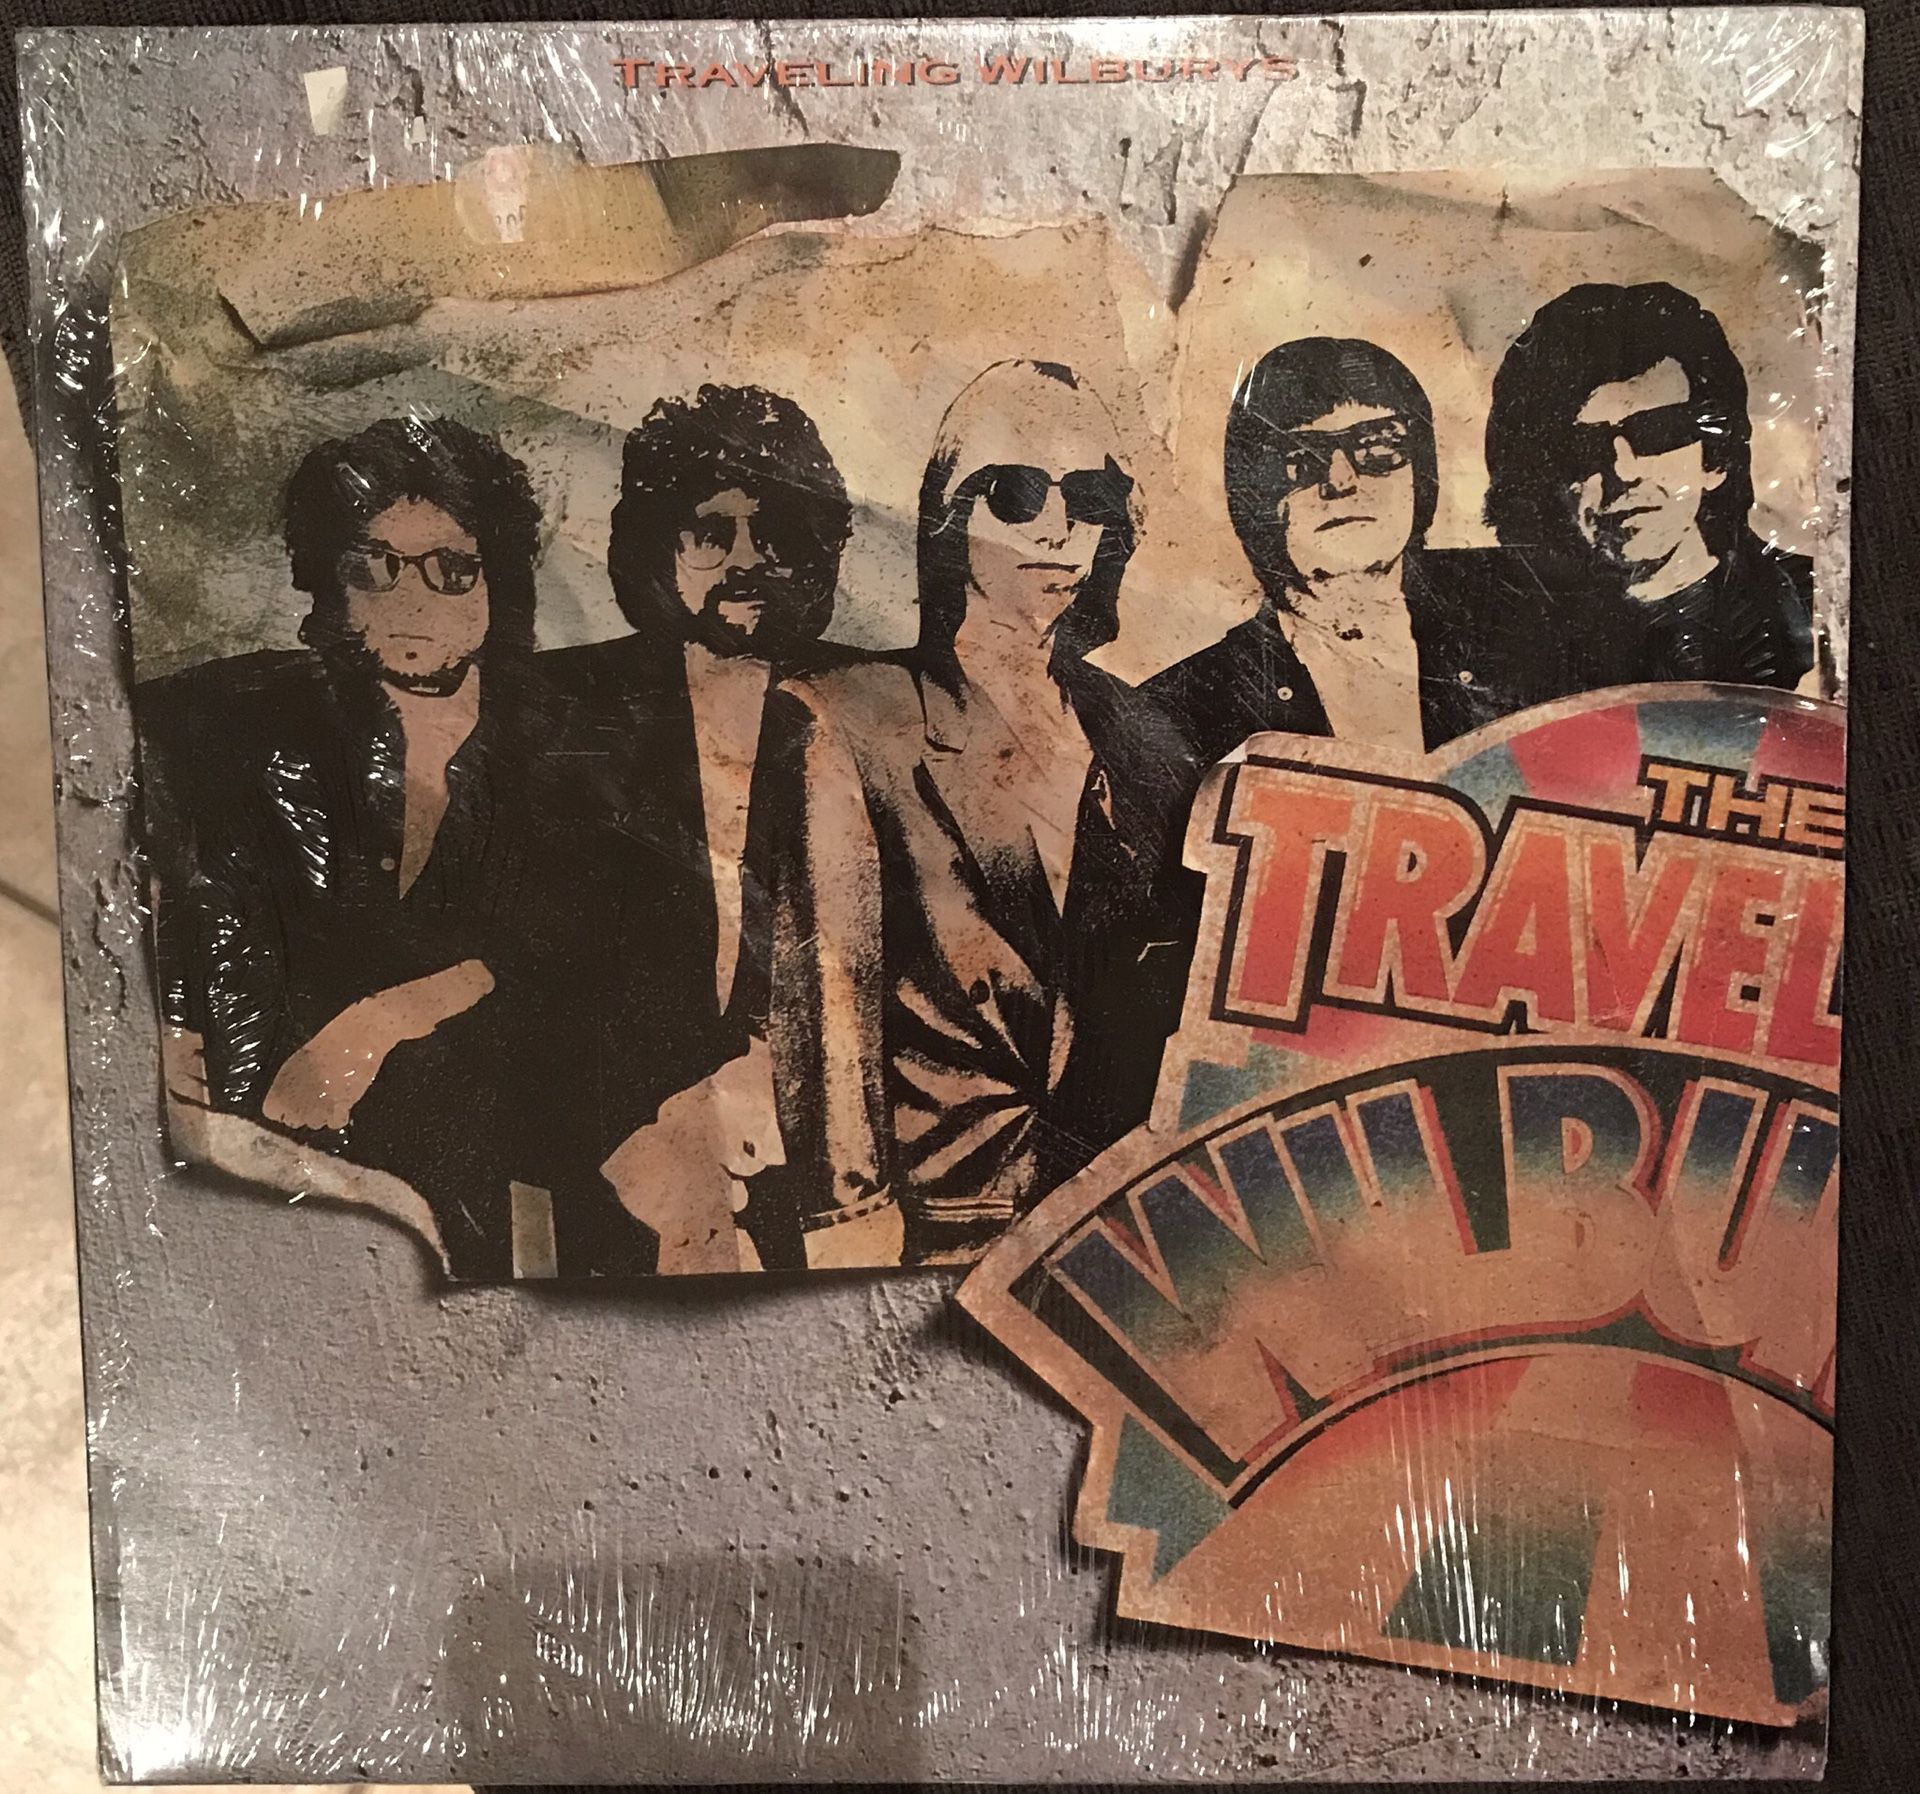 Traveling Wilburys vinyl record